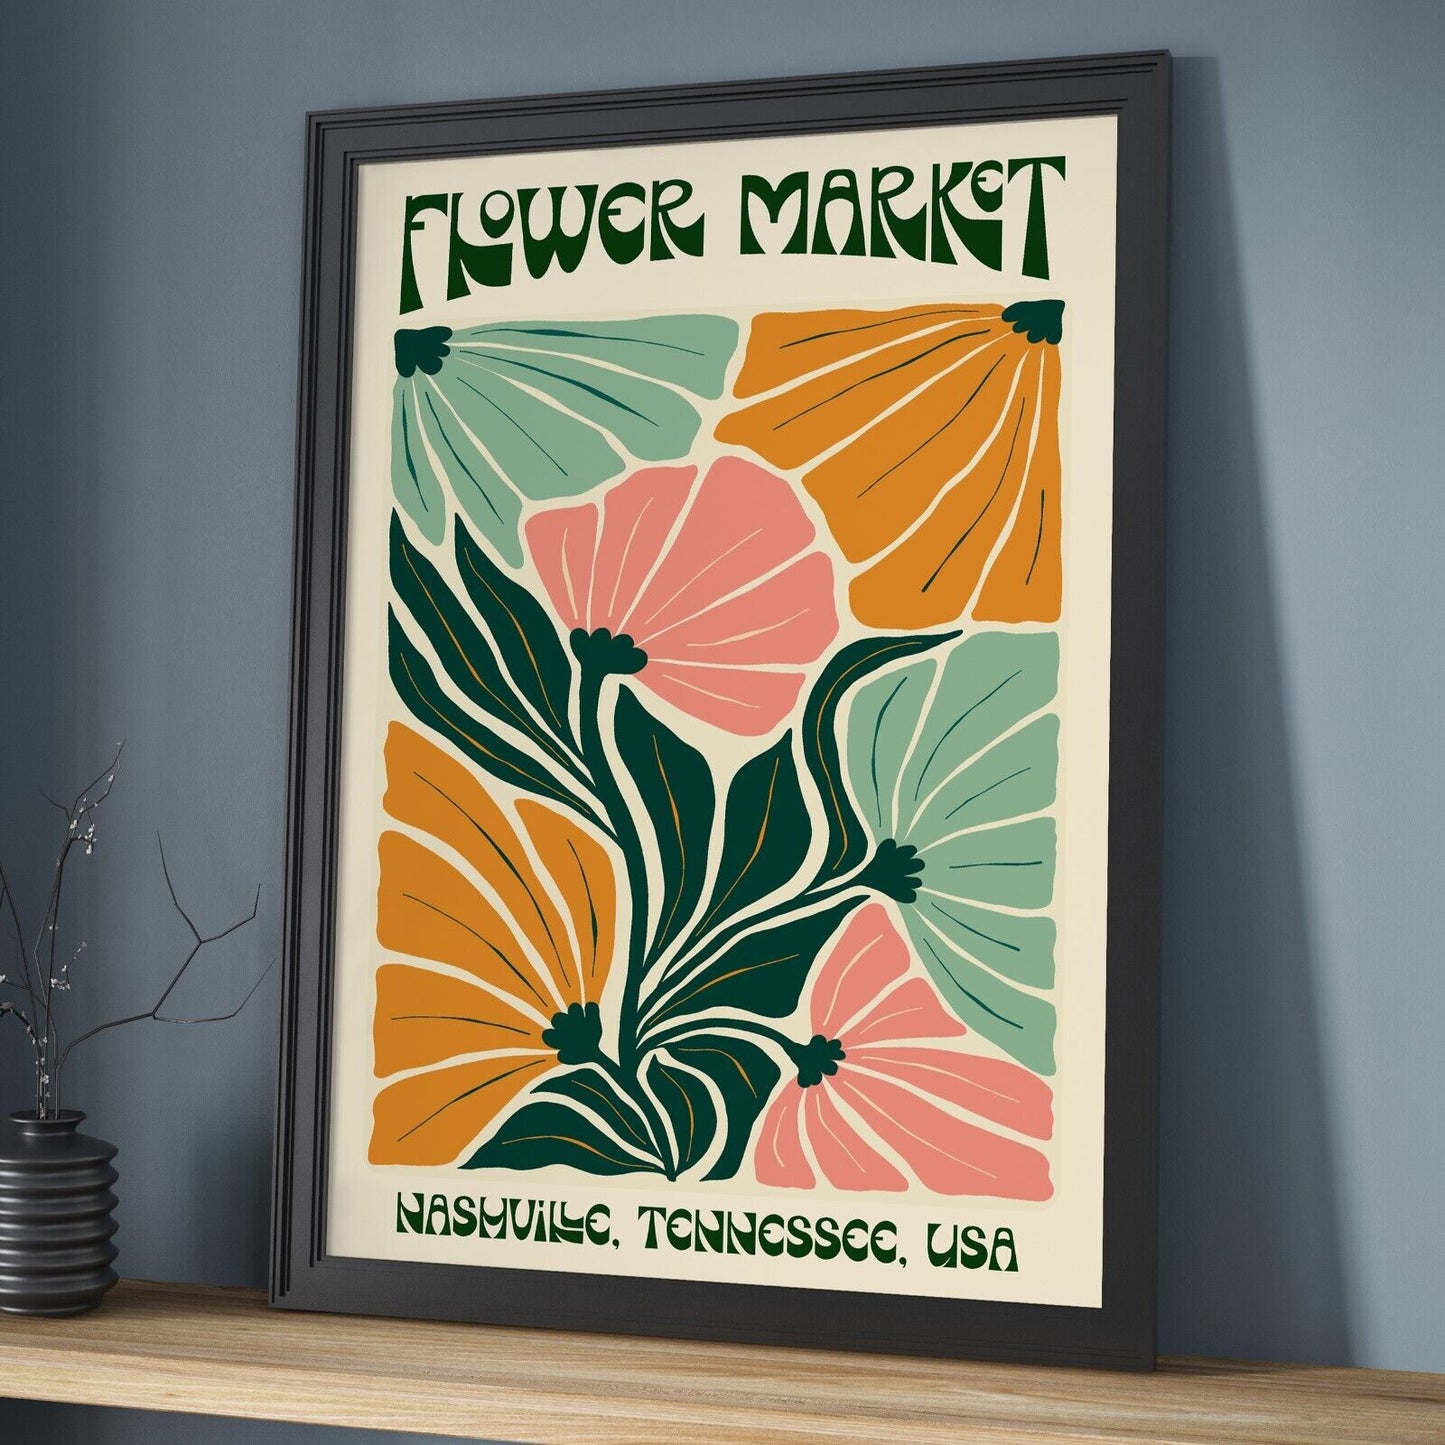 Nashville Flower Market Print, Wall Art Poster, Retro Floral Home Decor Print